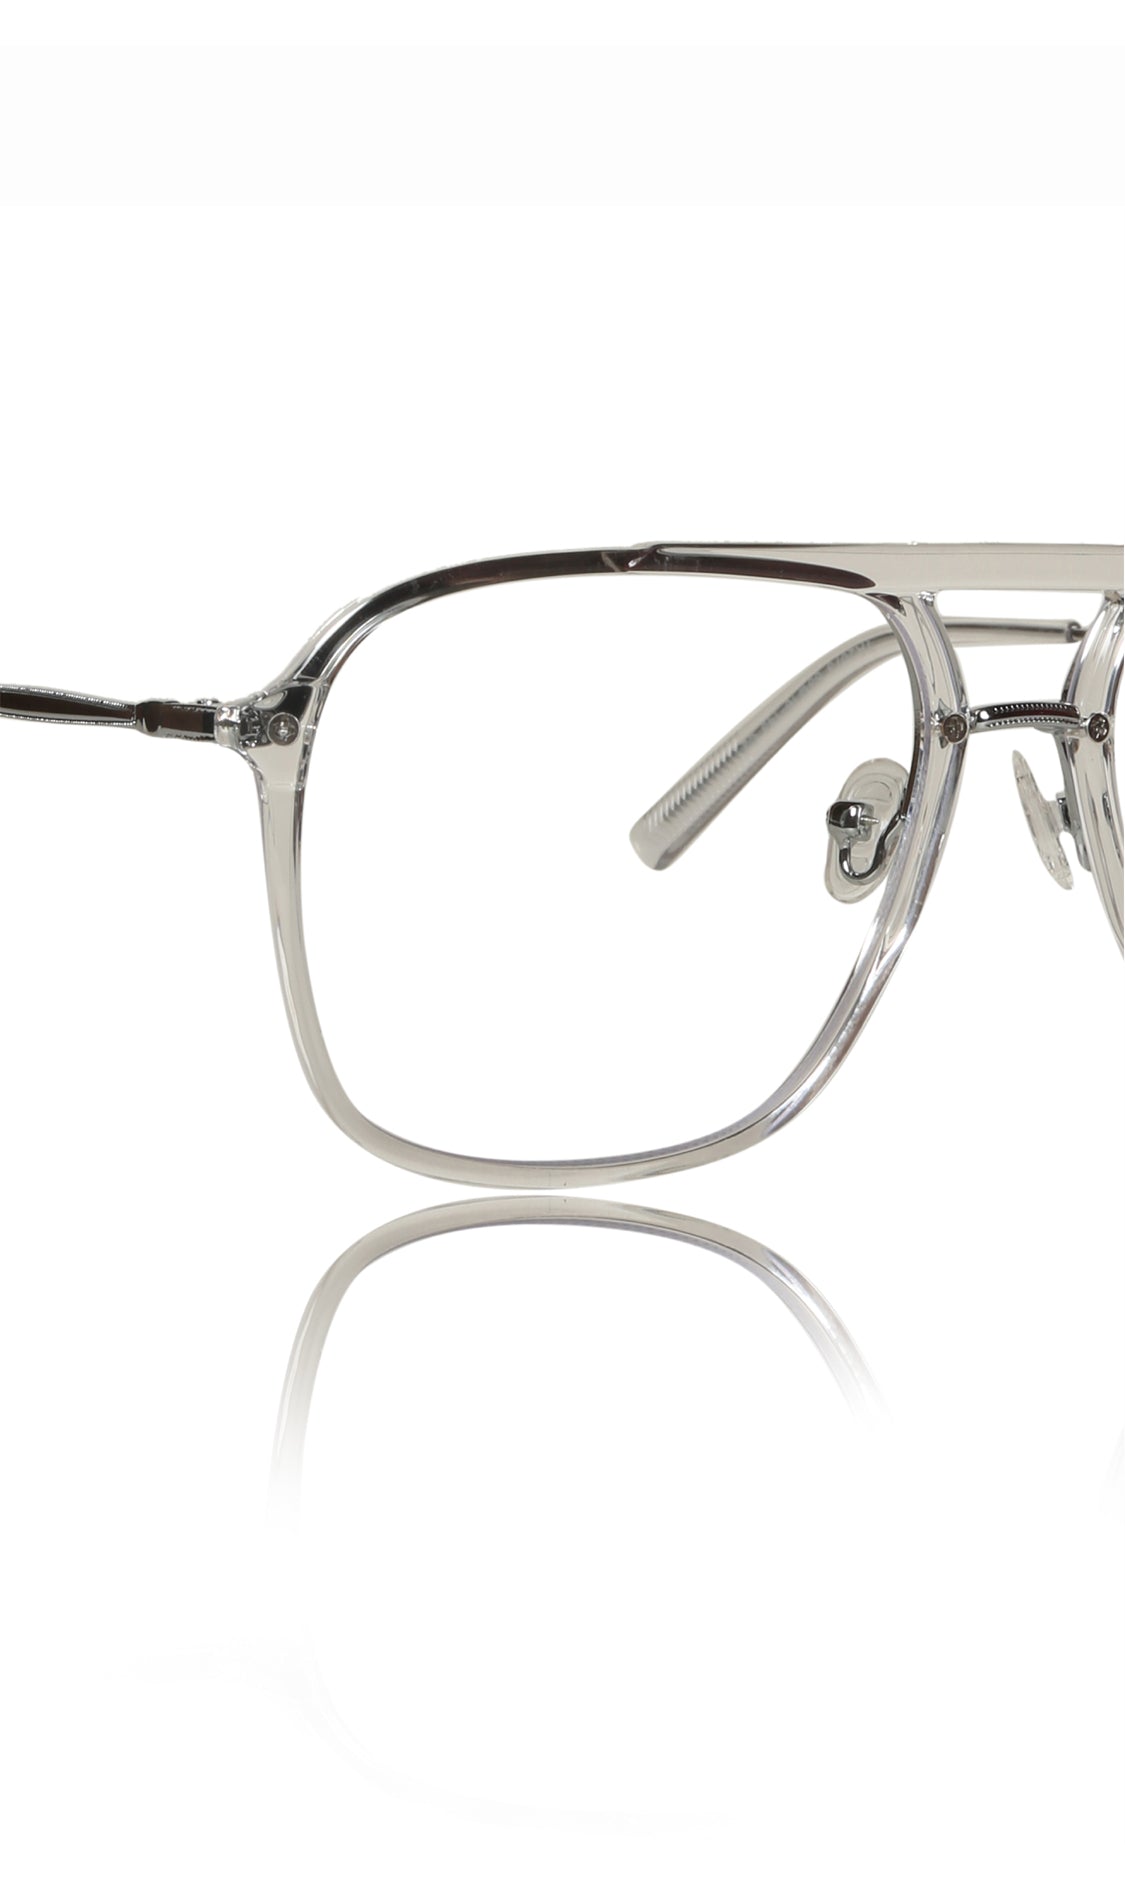 Jodykoes® Premium Series Double Bar Eyewear Eyeglasses Spectacles Frame for Men and Women (Transparent)